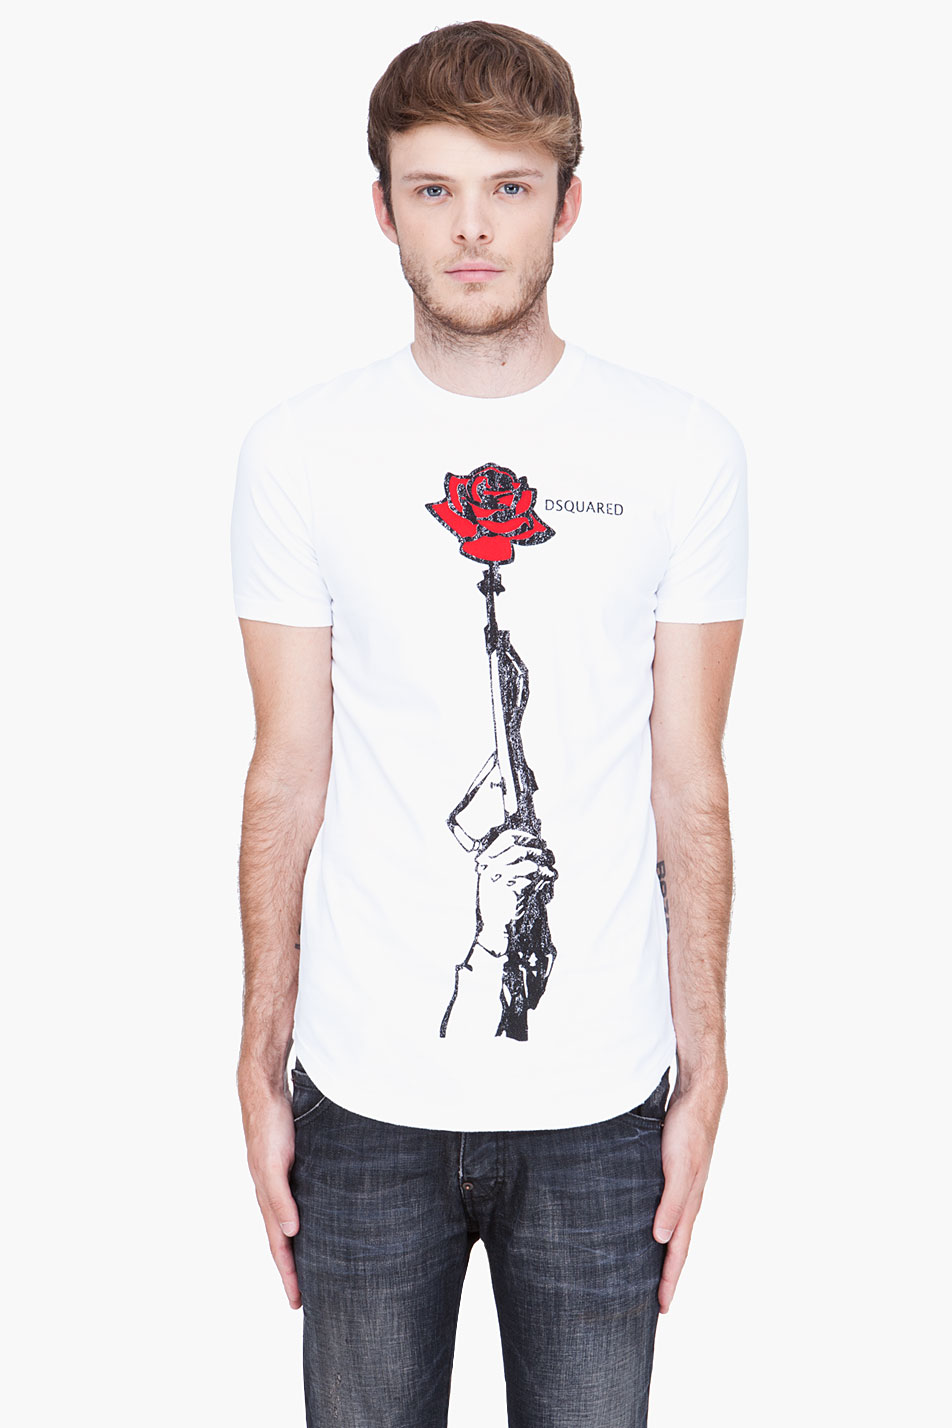 dsquared2 rose gun t shirt